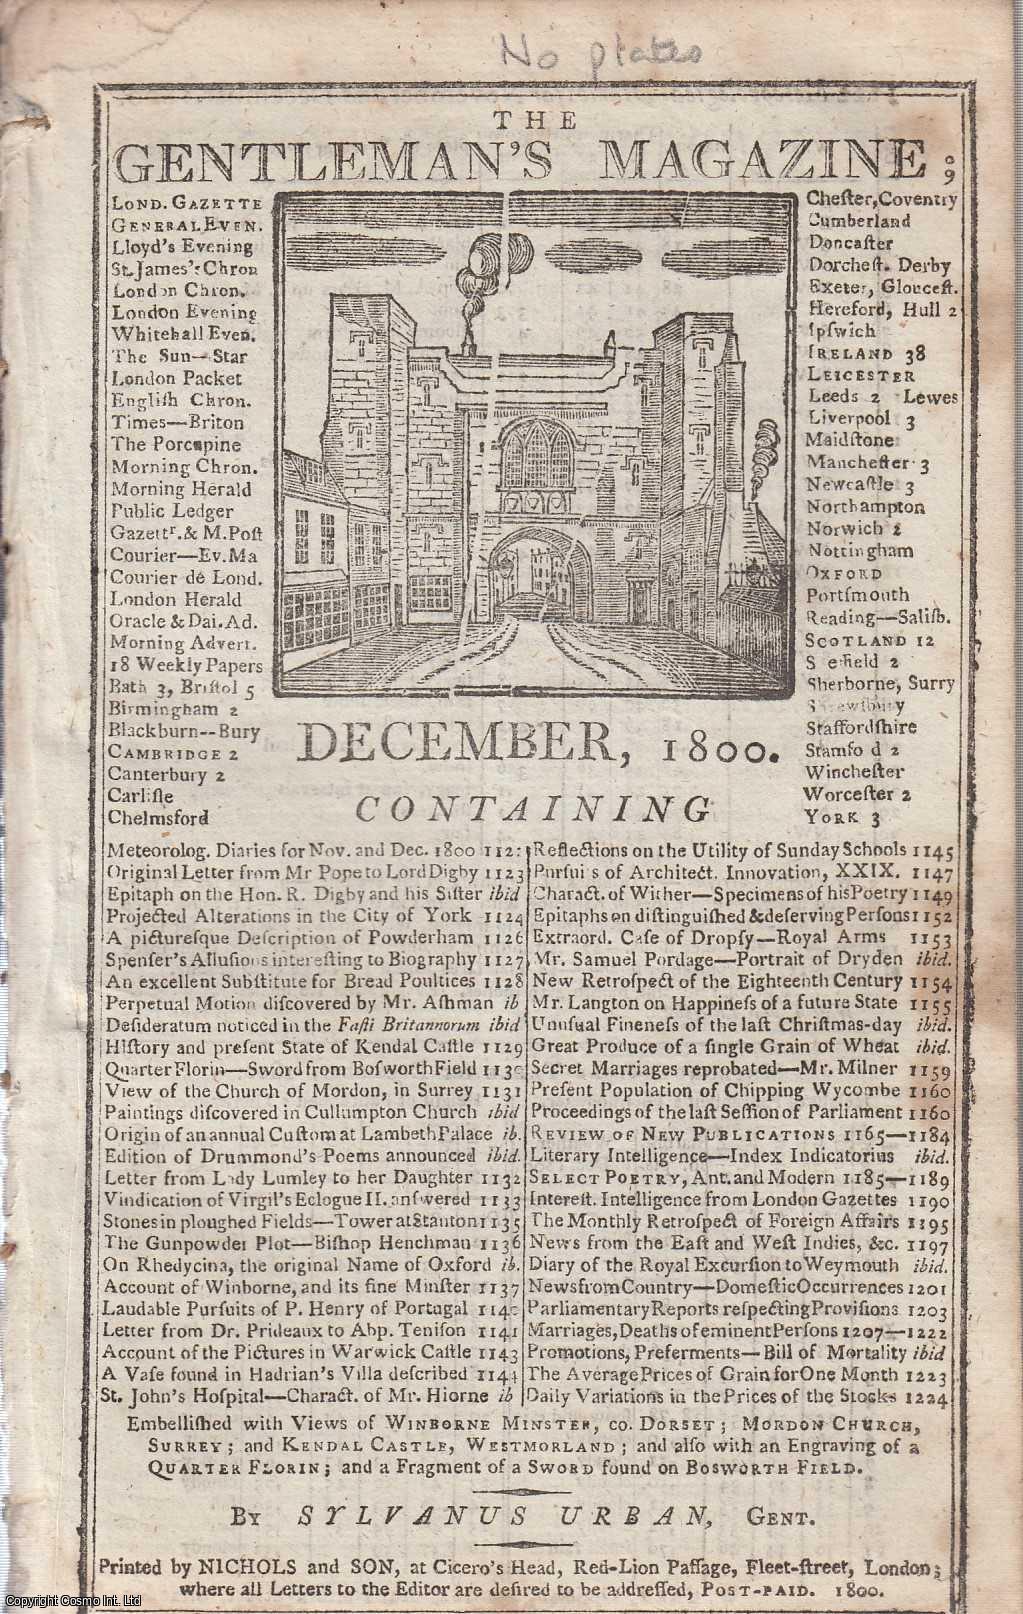 Sylvanus Urban - The Gentleman's Magazine for December 1800. A original original monthly issue of the Gentleman's Magazine, 1800.